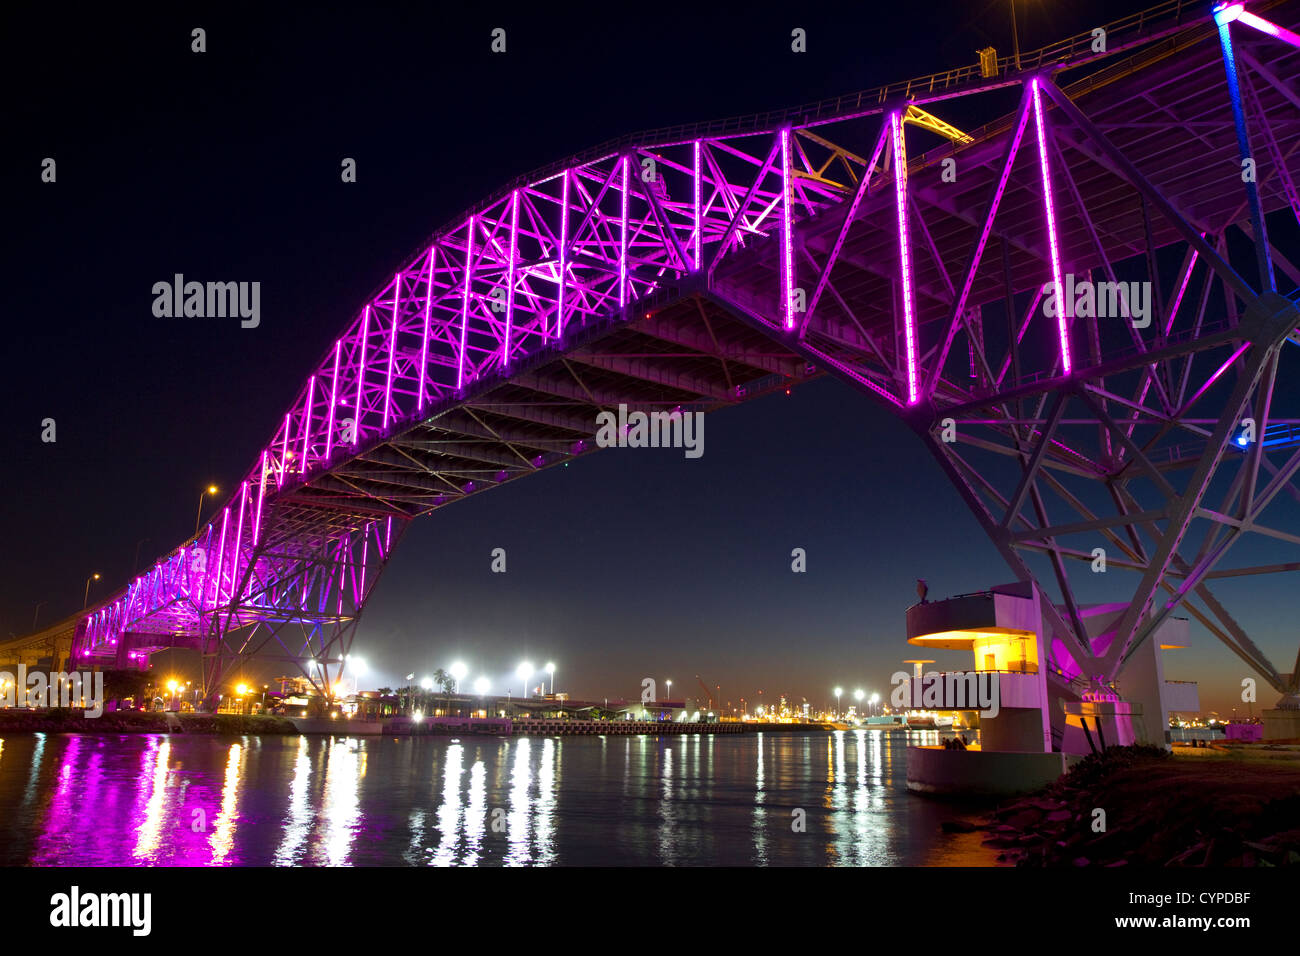 LED lights on the Corpus Christi Harbor Bridge located in Corpus Christi, Texas, USA. Stock Photo